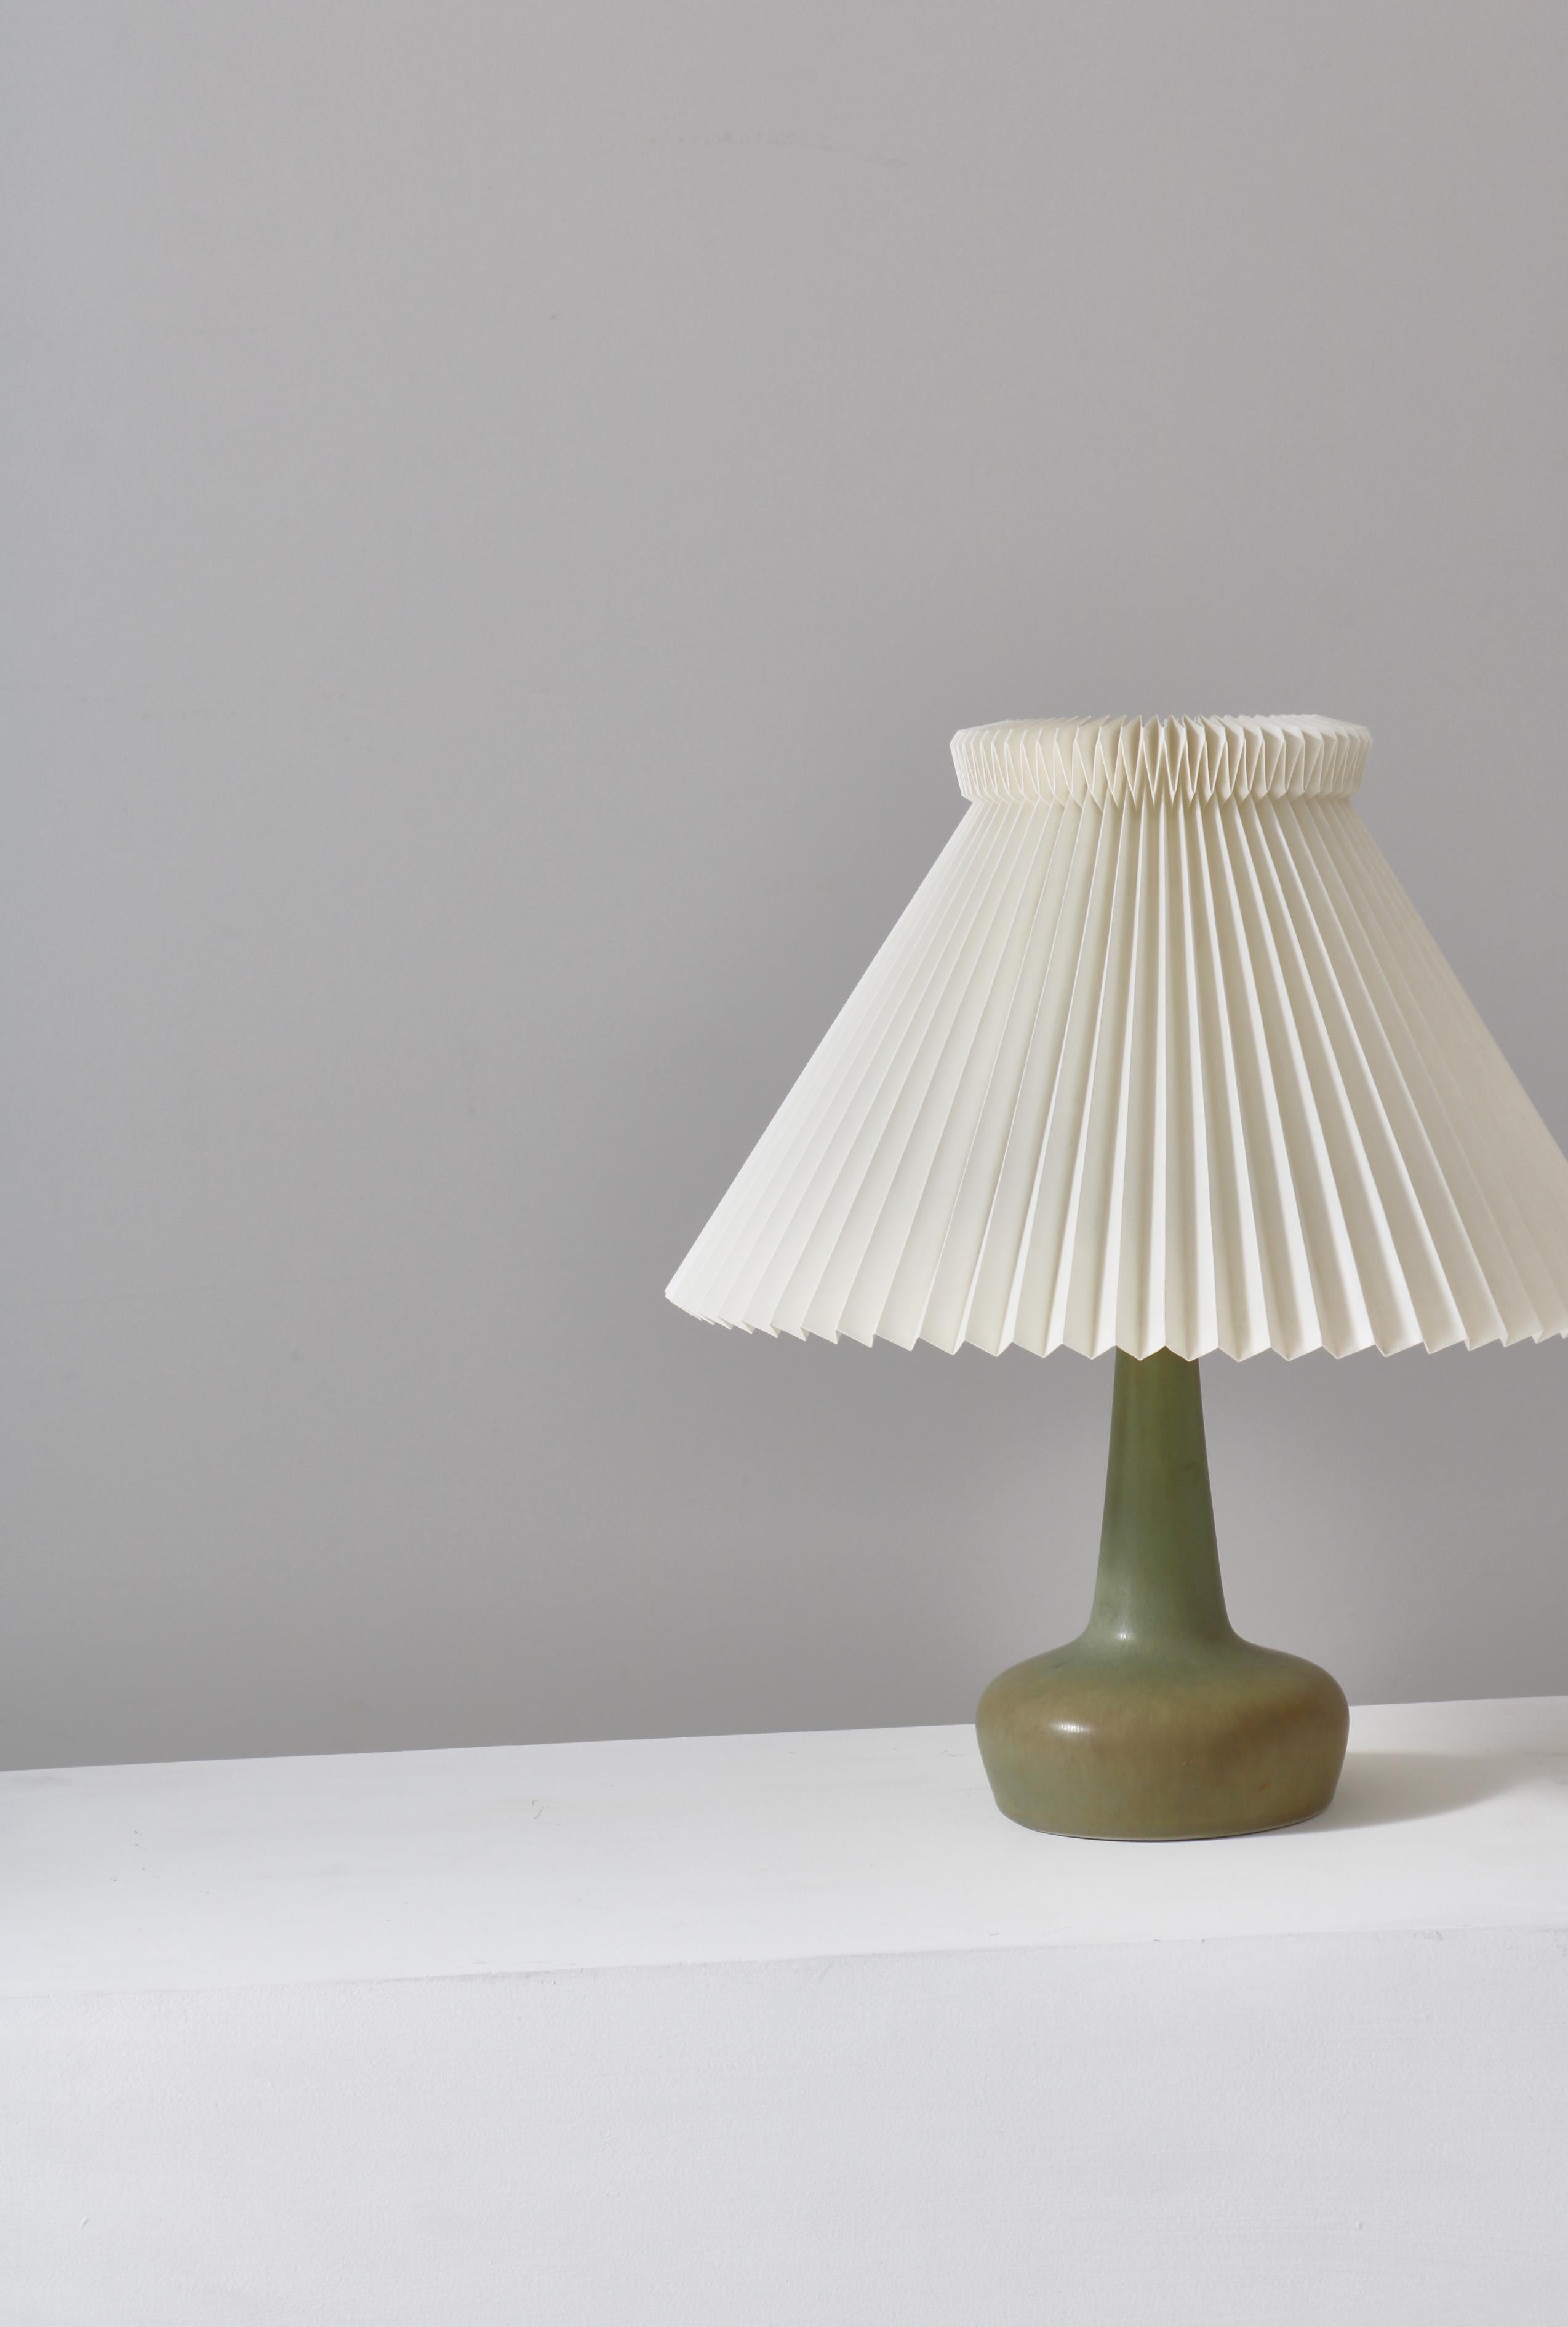 Le Klint & Palshus Stoneware Table Lamp Denmark by Esben Klint, 1970s For Sale 10